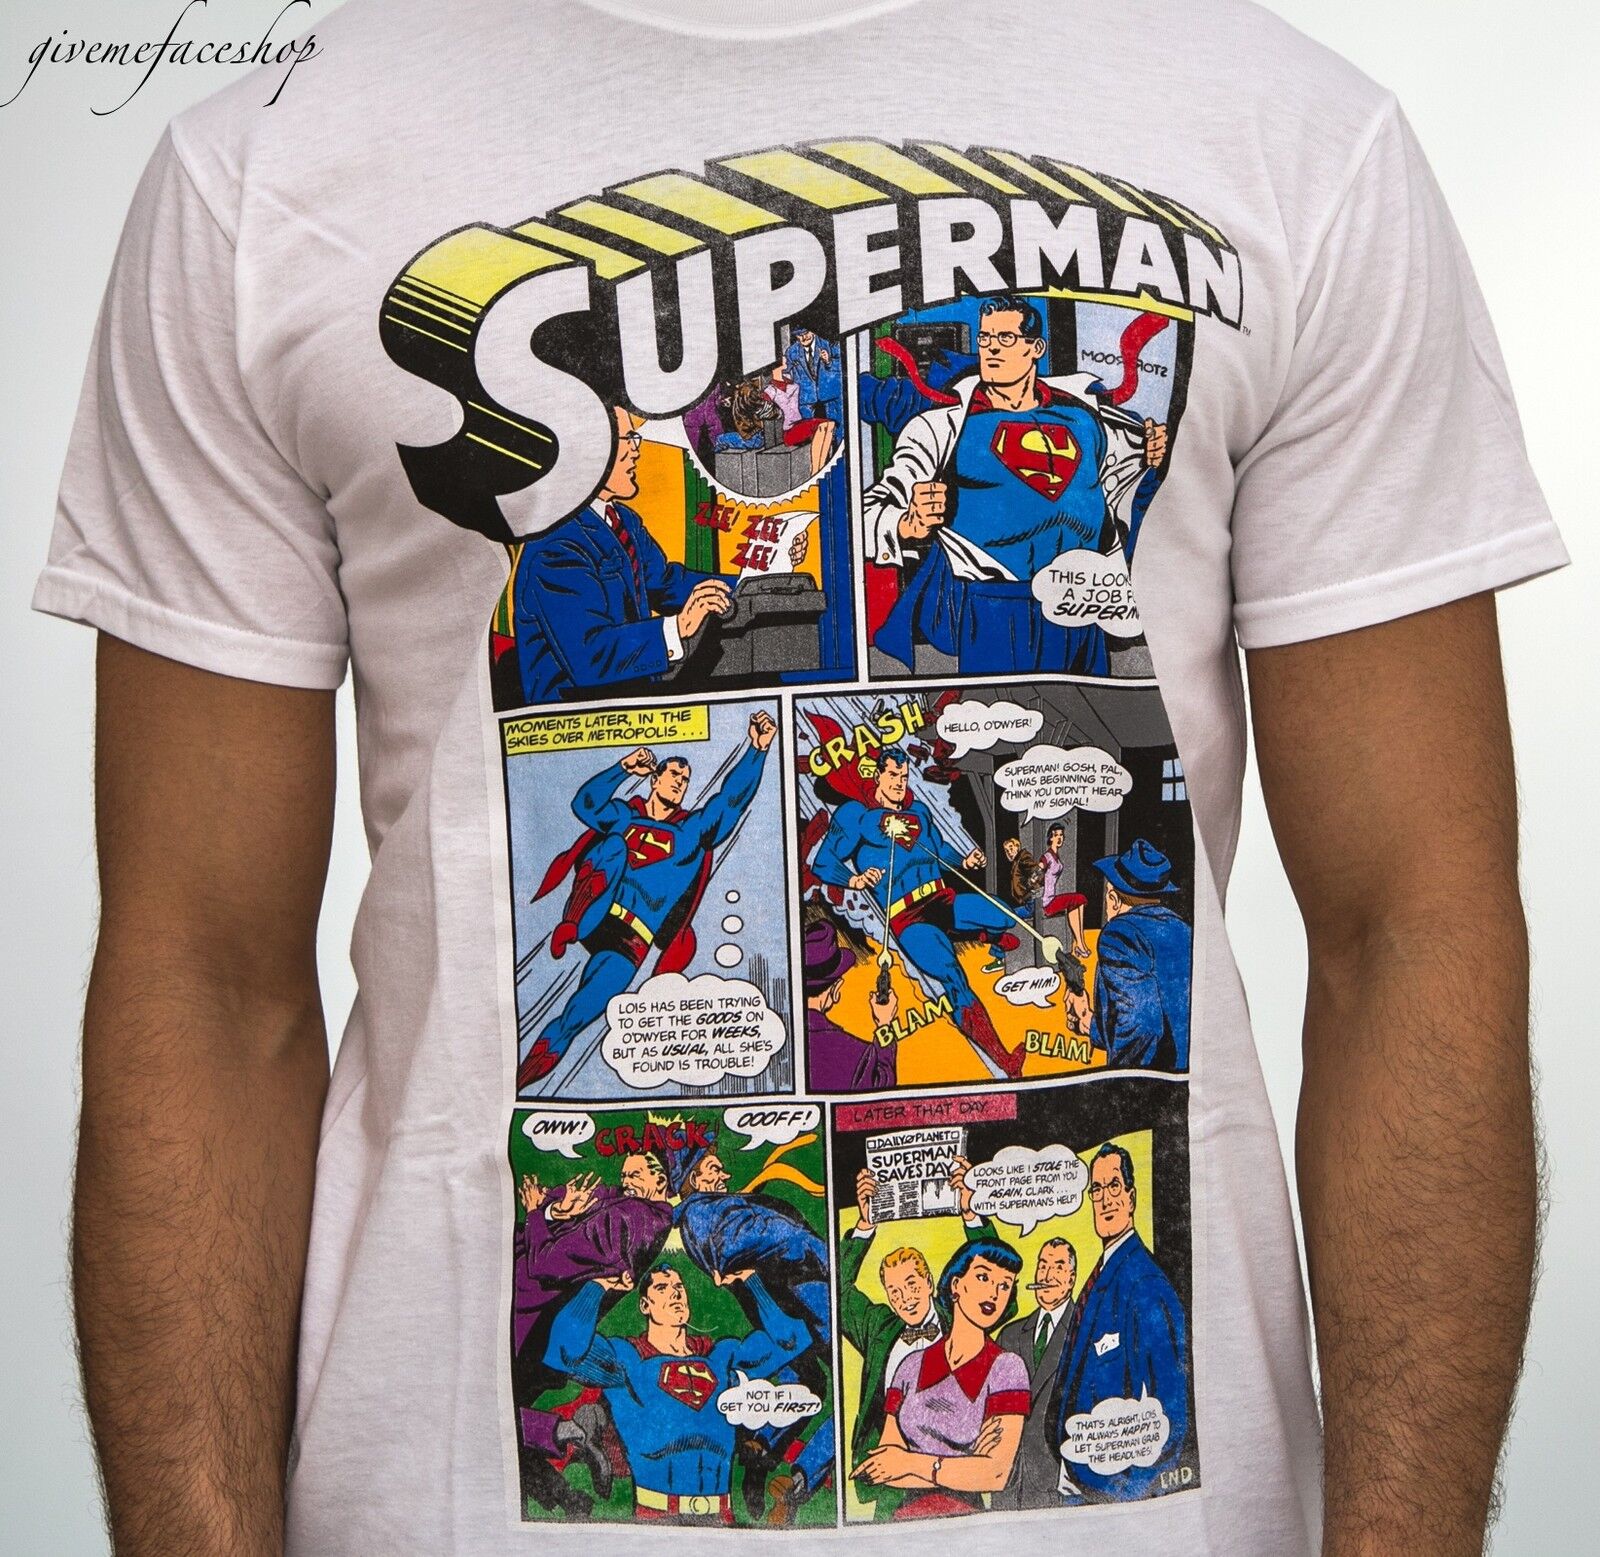 Official Superman shirts, DC comics, WB tm tees, street comic | eBay